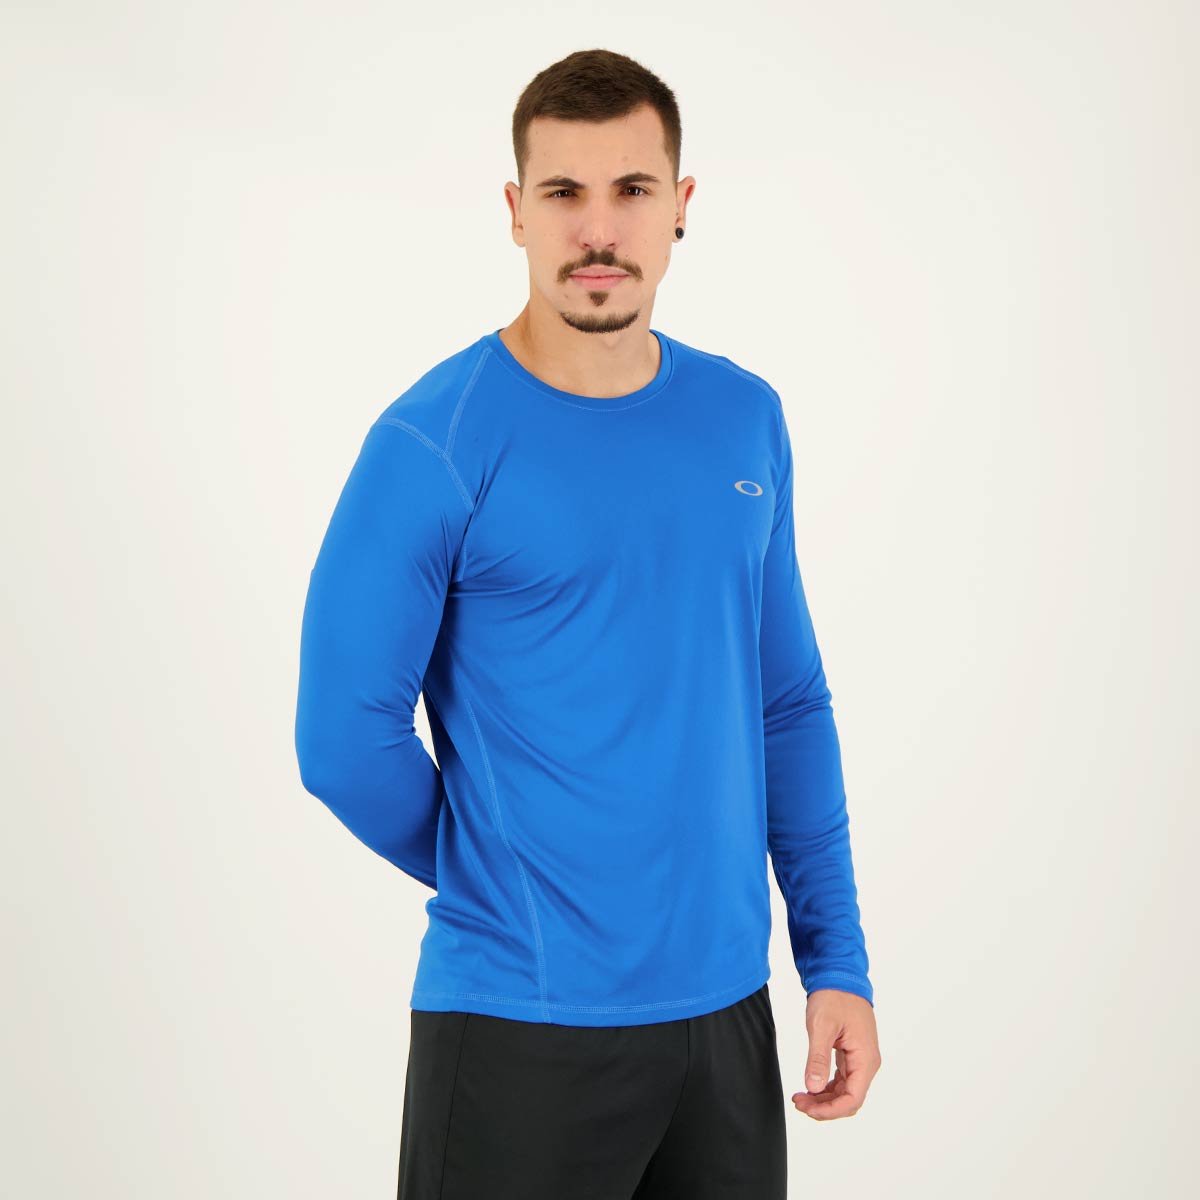 Camiseta Masculina Mod Daily Sport Tee Iii - Oakley - Azul - Oqvestir